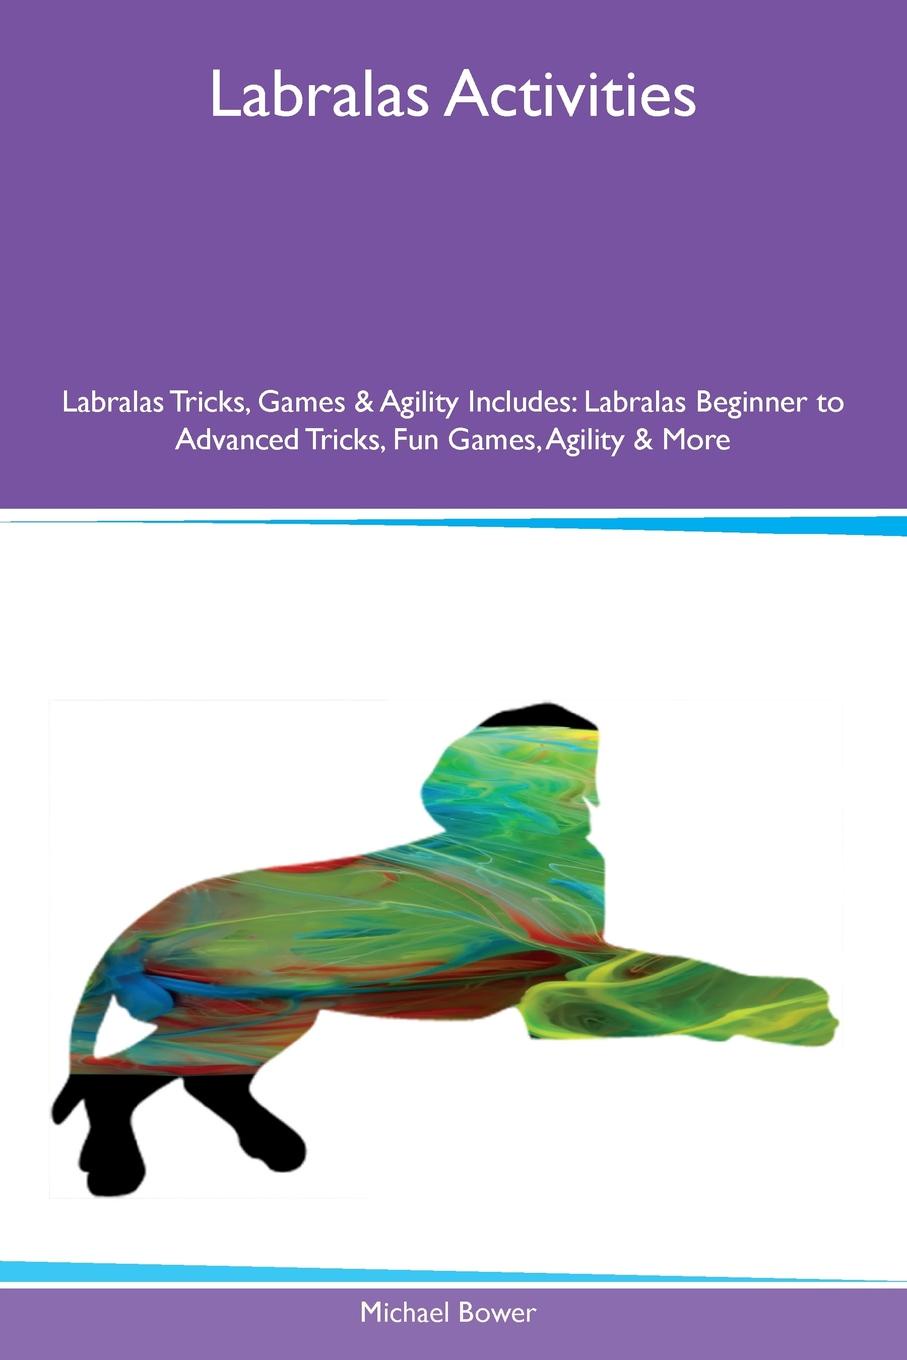 Labralas Activities Labralas Tricks, Games & Agility Includes. Labralas Beginner to Advanced Tricks, Fun Games, Agility & More